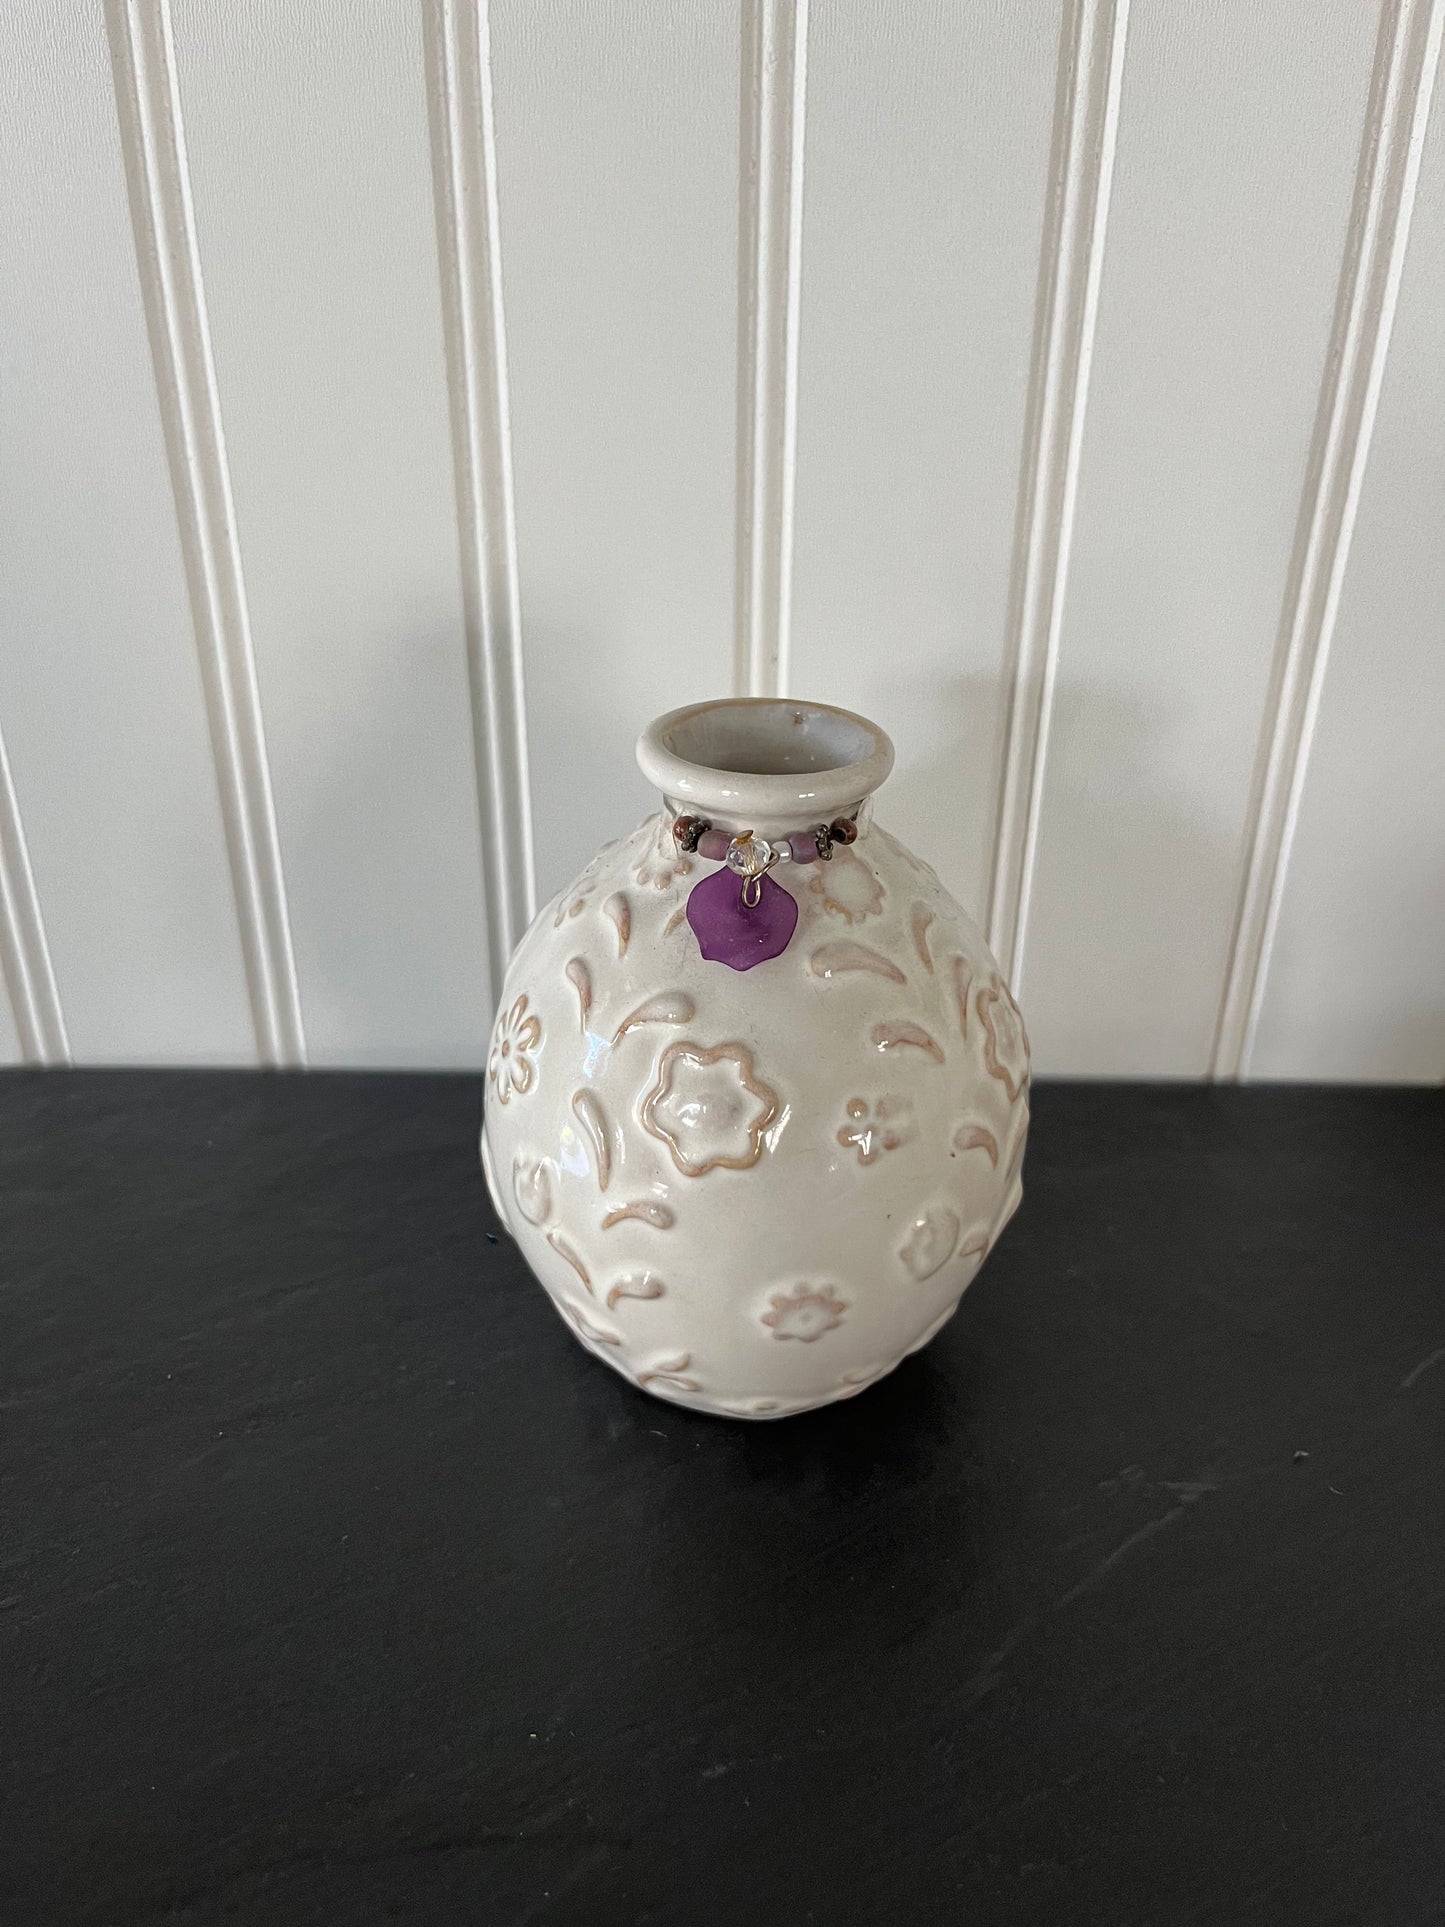 Vintage Inspired Small Flower Embossed Pottery Whitewash Bud Vase - 3" x 4" (5.5 oz) - Versatile Home Decor Accent